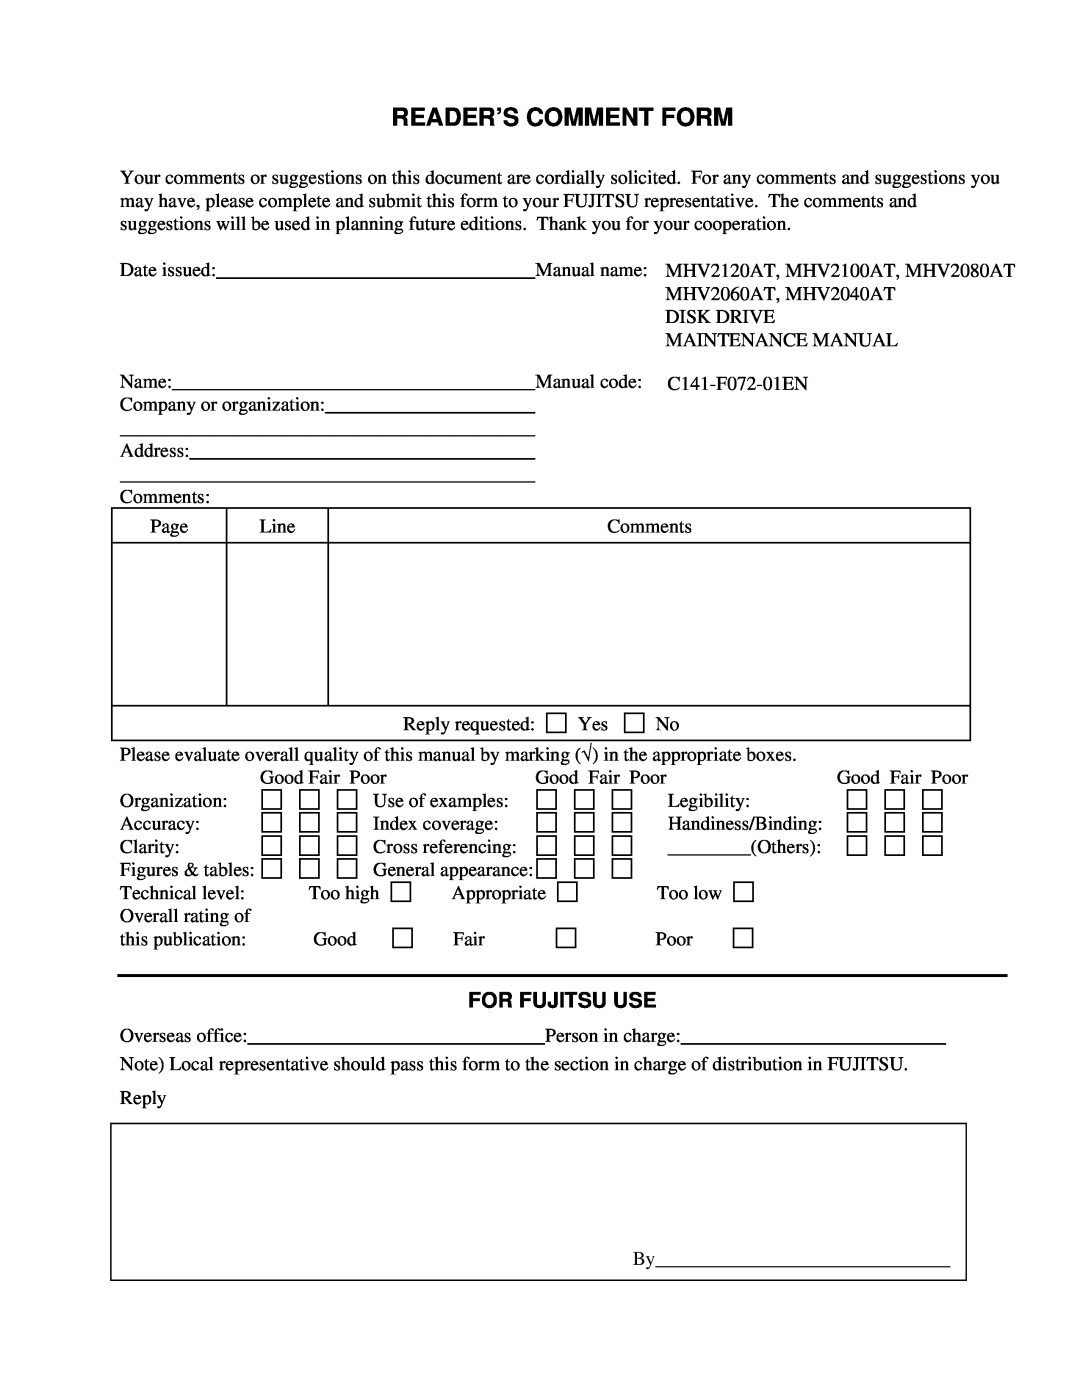 Fujitsu MHV2120AT manual Reader’S Comment Form, For Fujitsu Use 